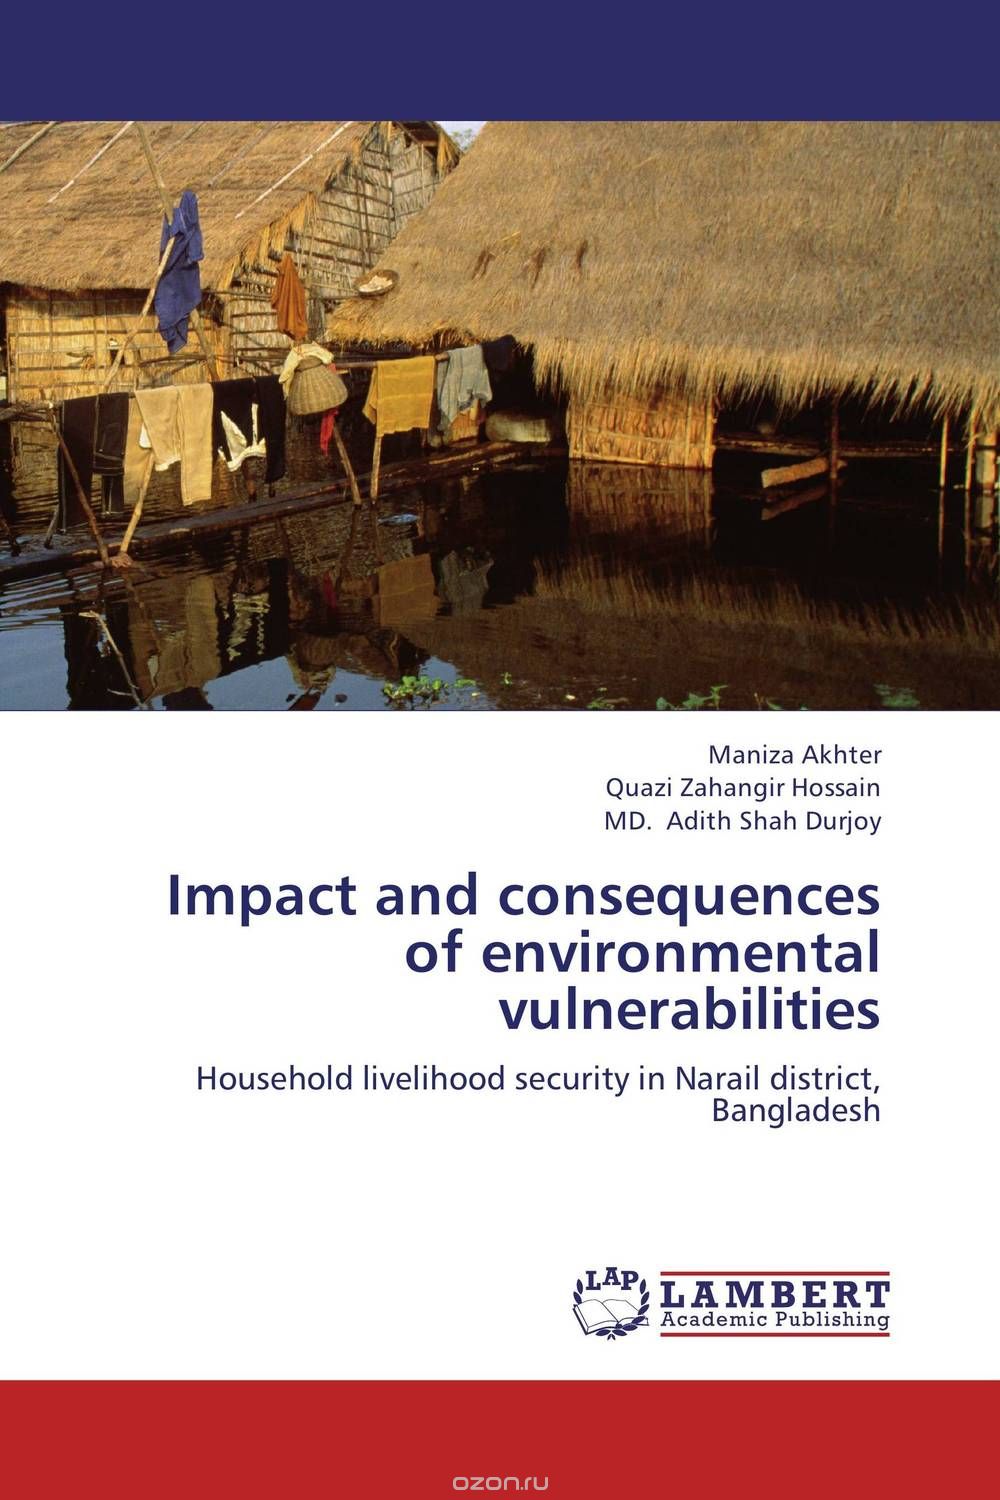 Скачать книгу "Impact and consequences of environmental vulnerabilities"